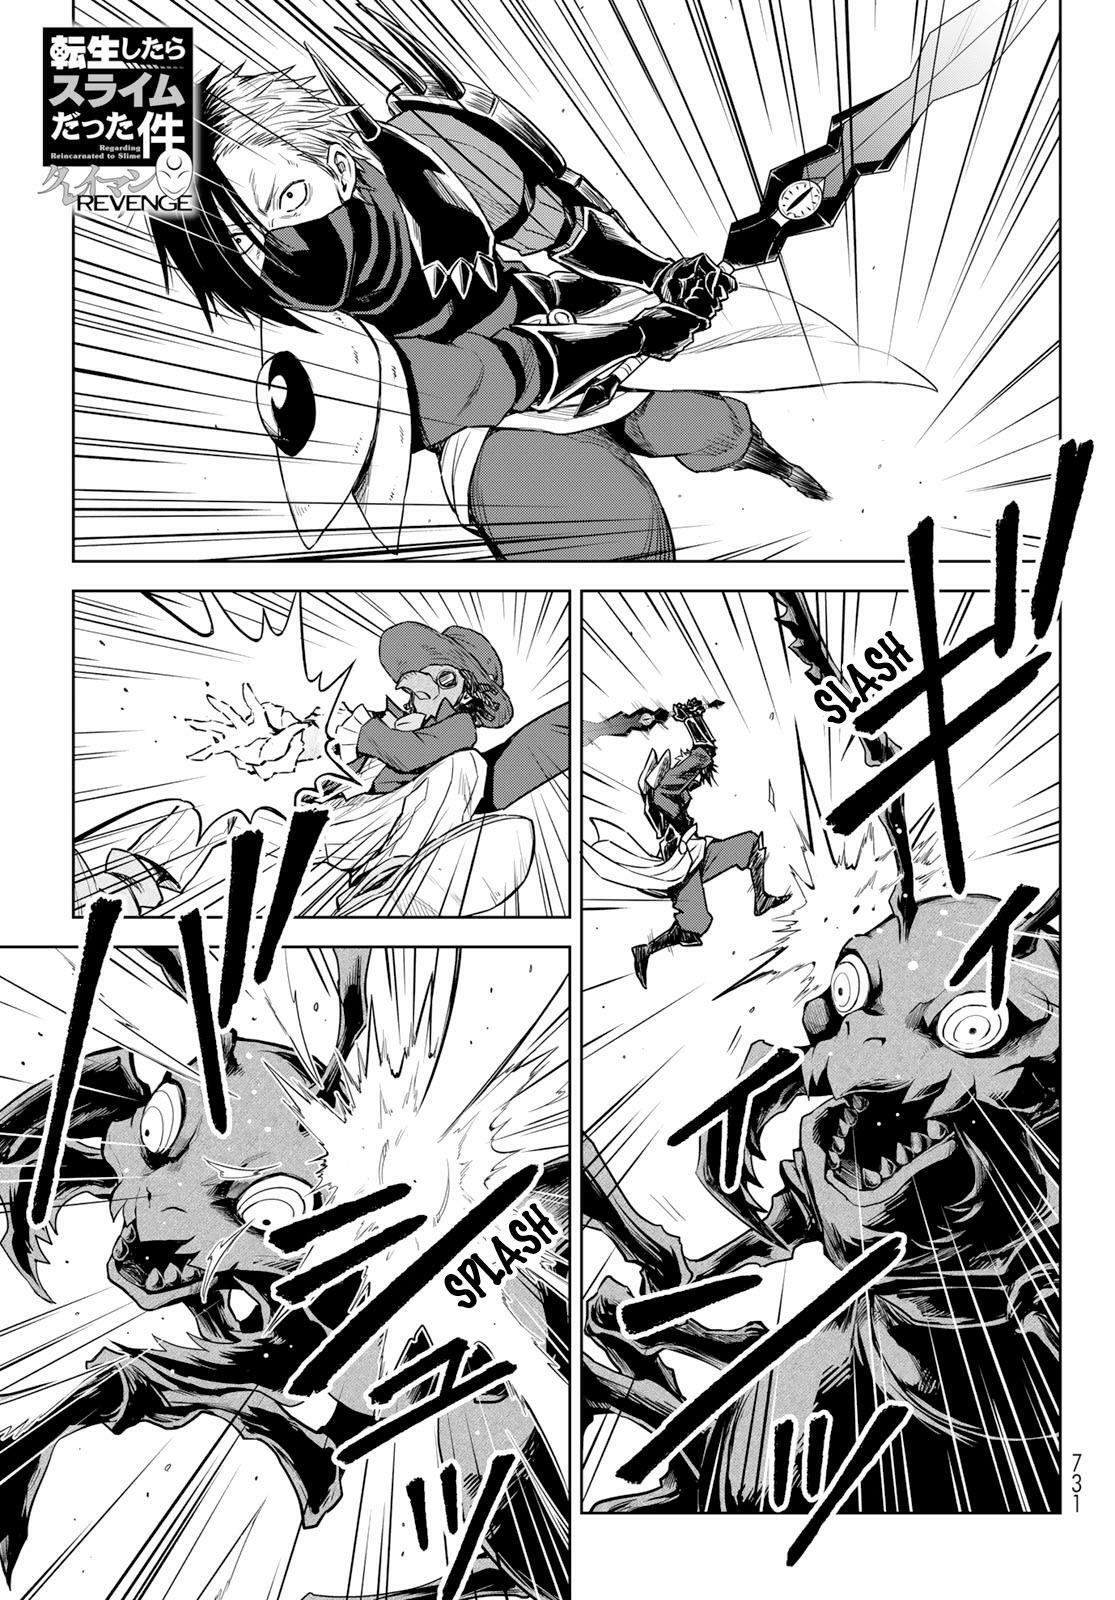 Read Tensei Shitara Slime Datta Ken: Clayman Revenge Vol.3 Chapter 14:  Overpower on Mangakakalot